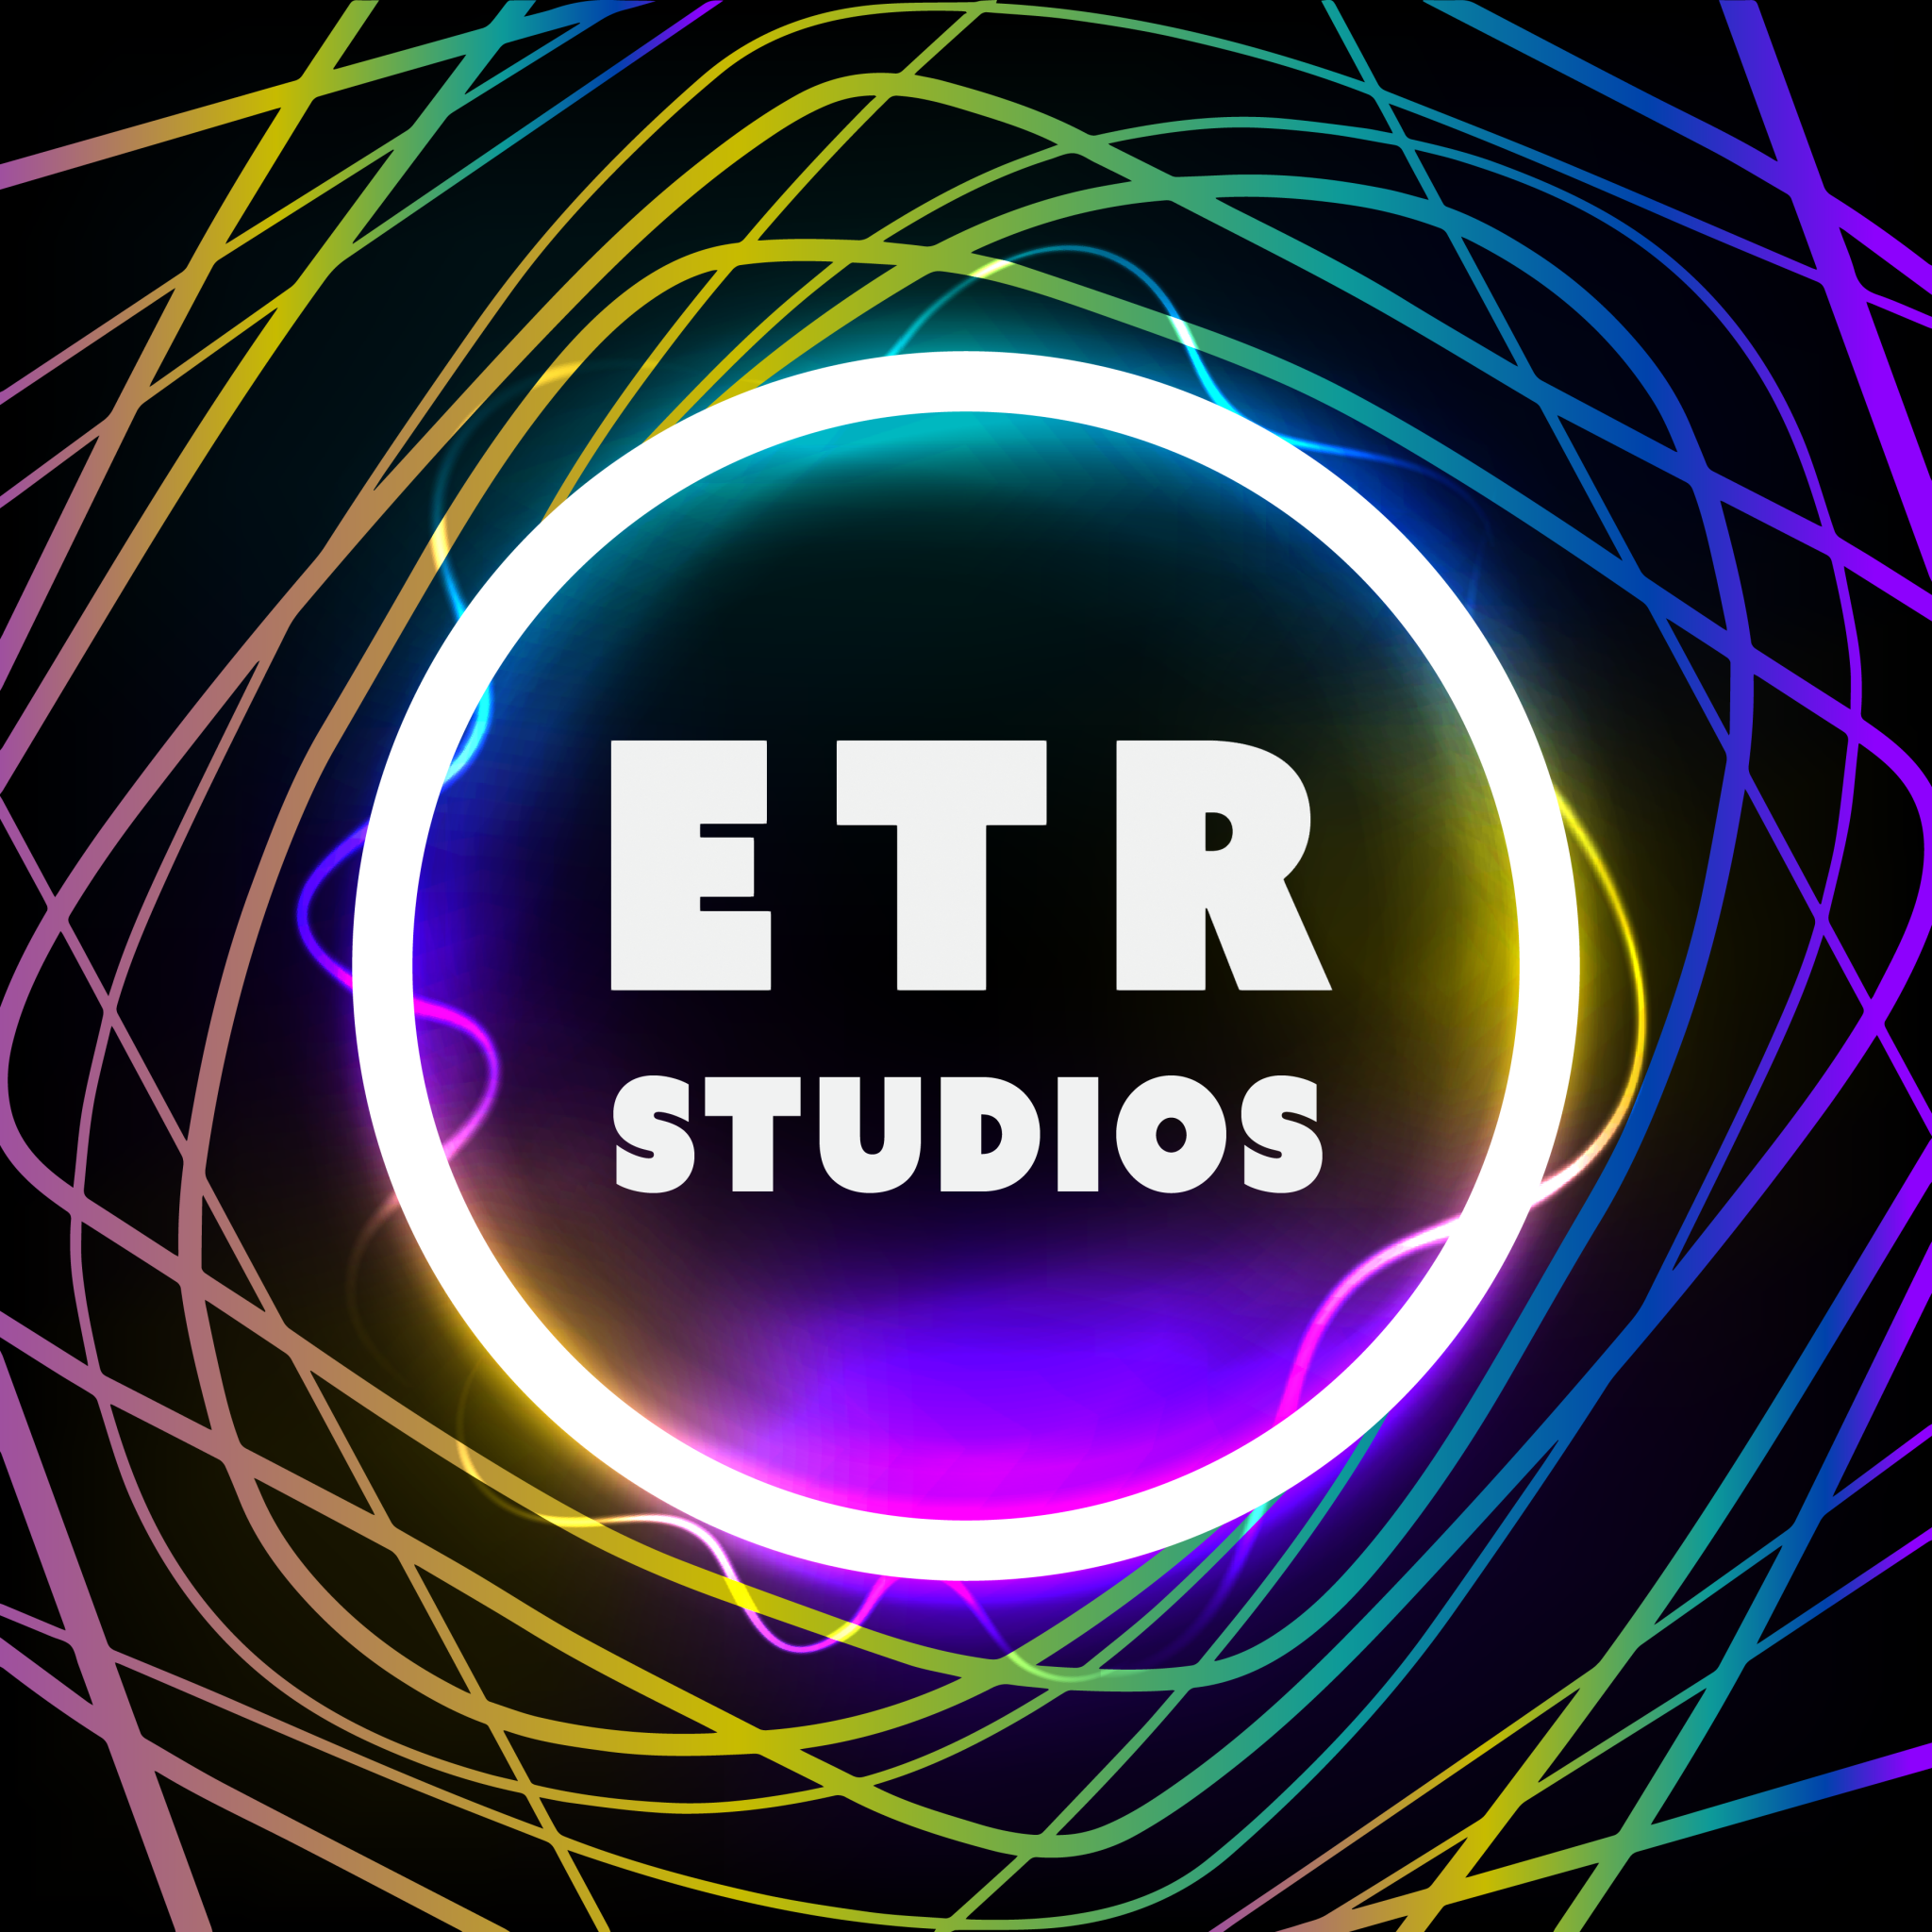 ETR Studios